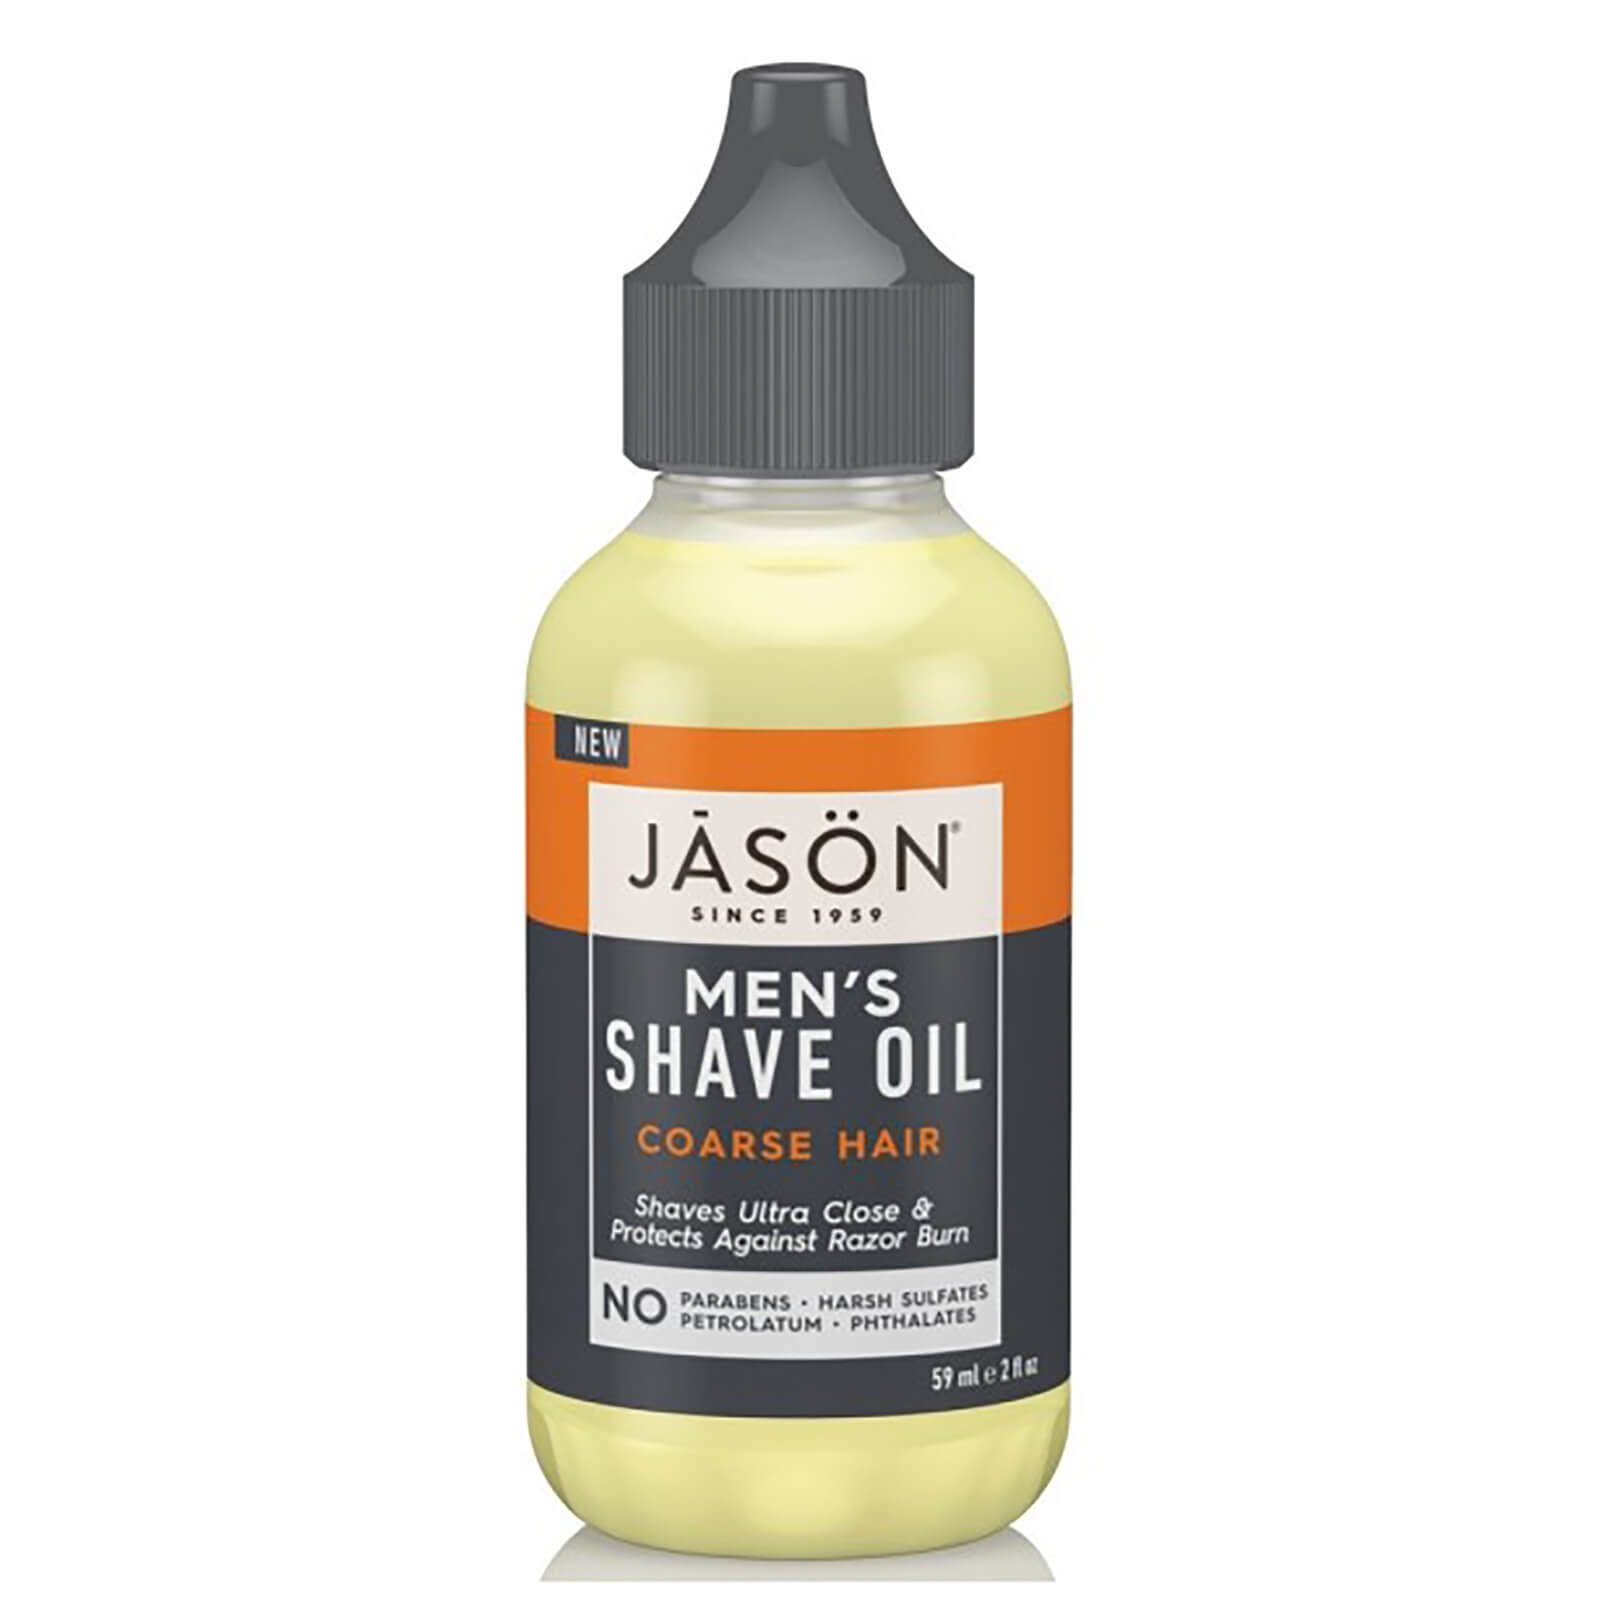 JASON Men`s Shave Oil – Coarse Hair lookfantastic.com imagine